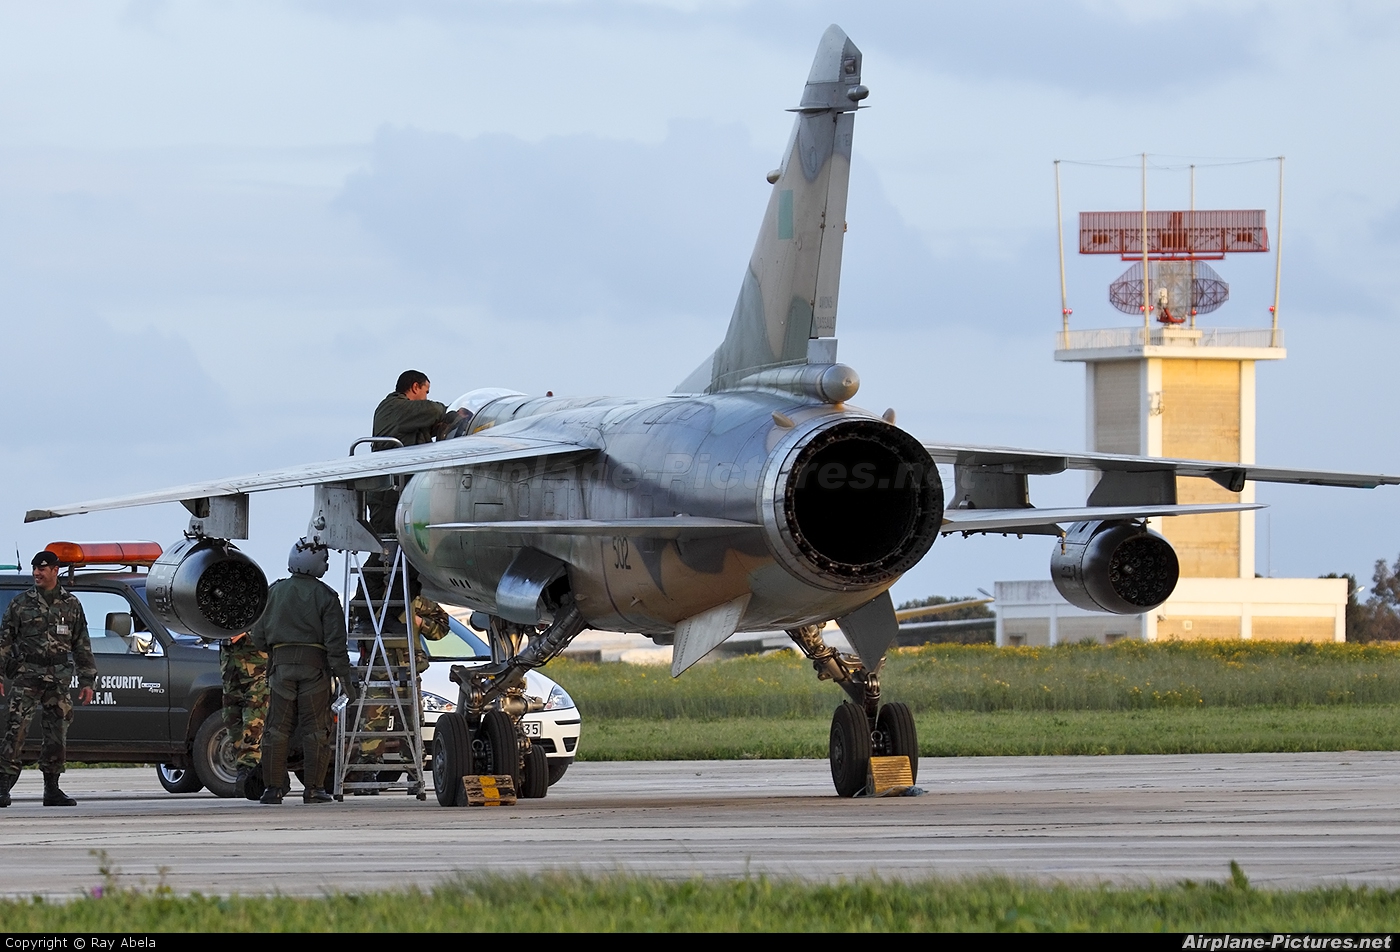 Dassault Mirage F1 Backgrounds, Compatible - PC, Mobile, Gadgets| 1400x952 px